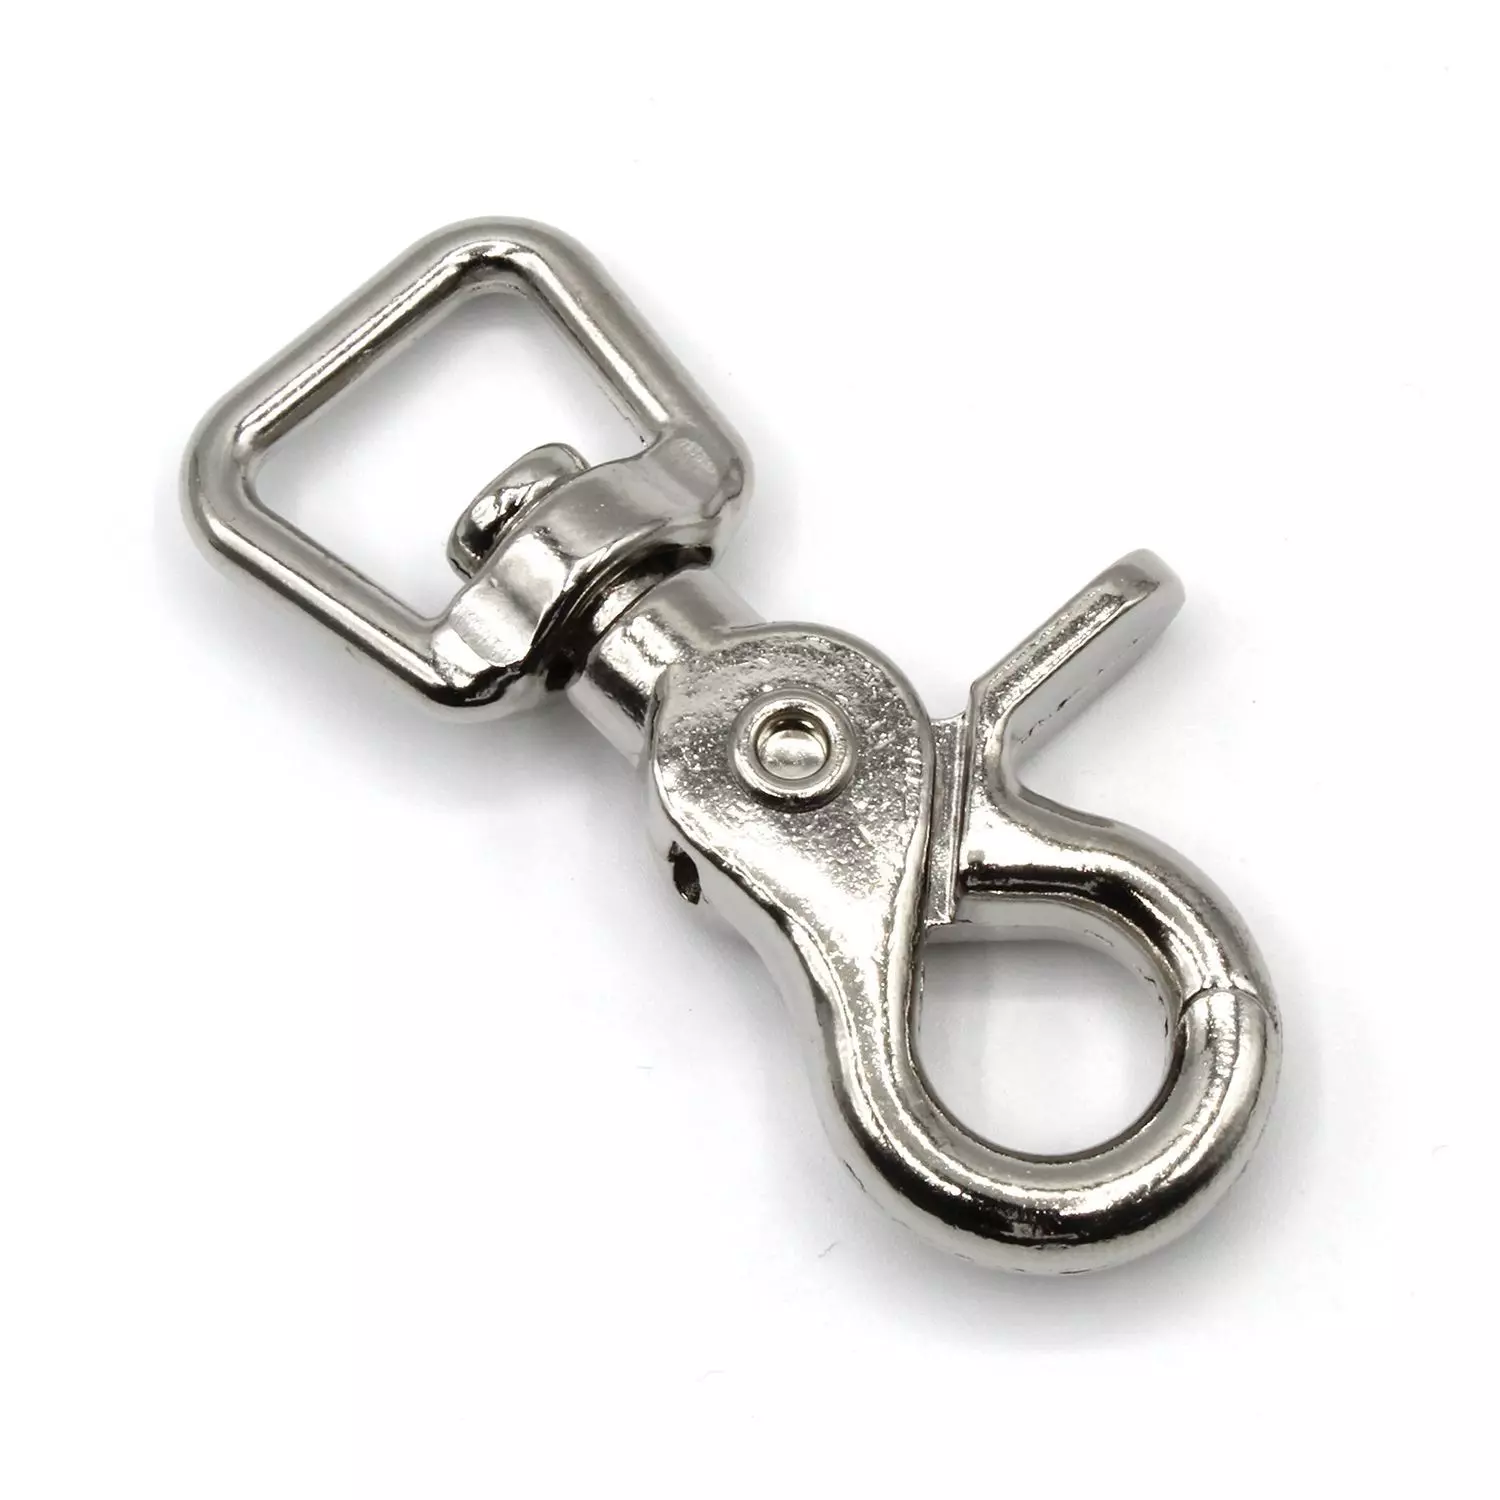 Swivel Eye Bolt Snap Hook Stainless Steel 12MM (Key Ring Leash